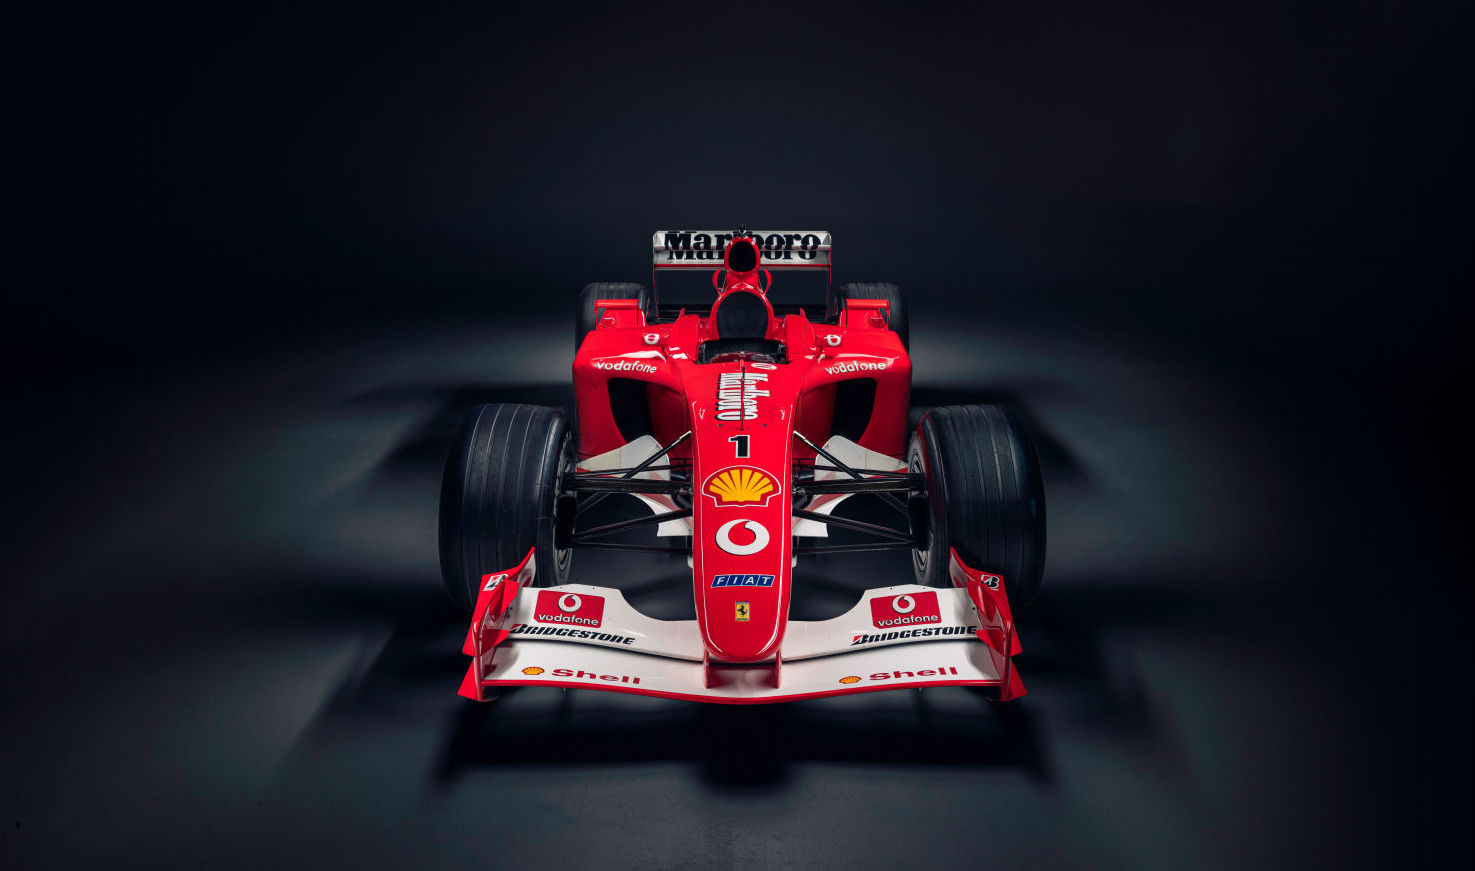 Michael Schumacher: Rare Ferrari racing car from 2000 season